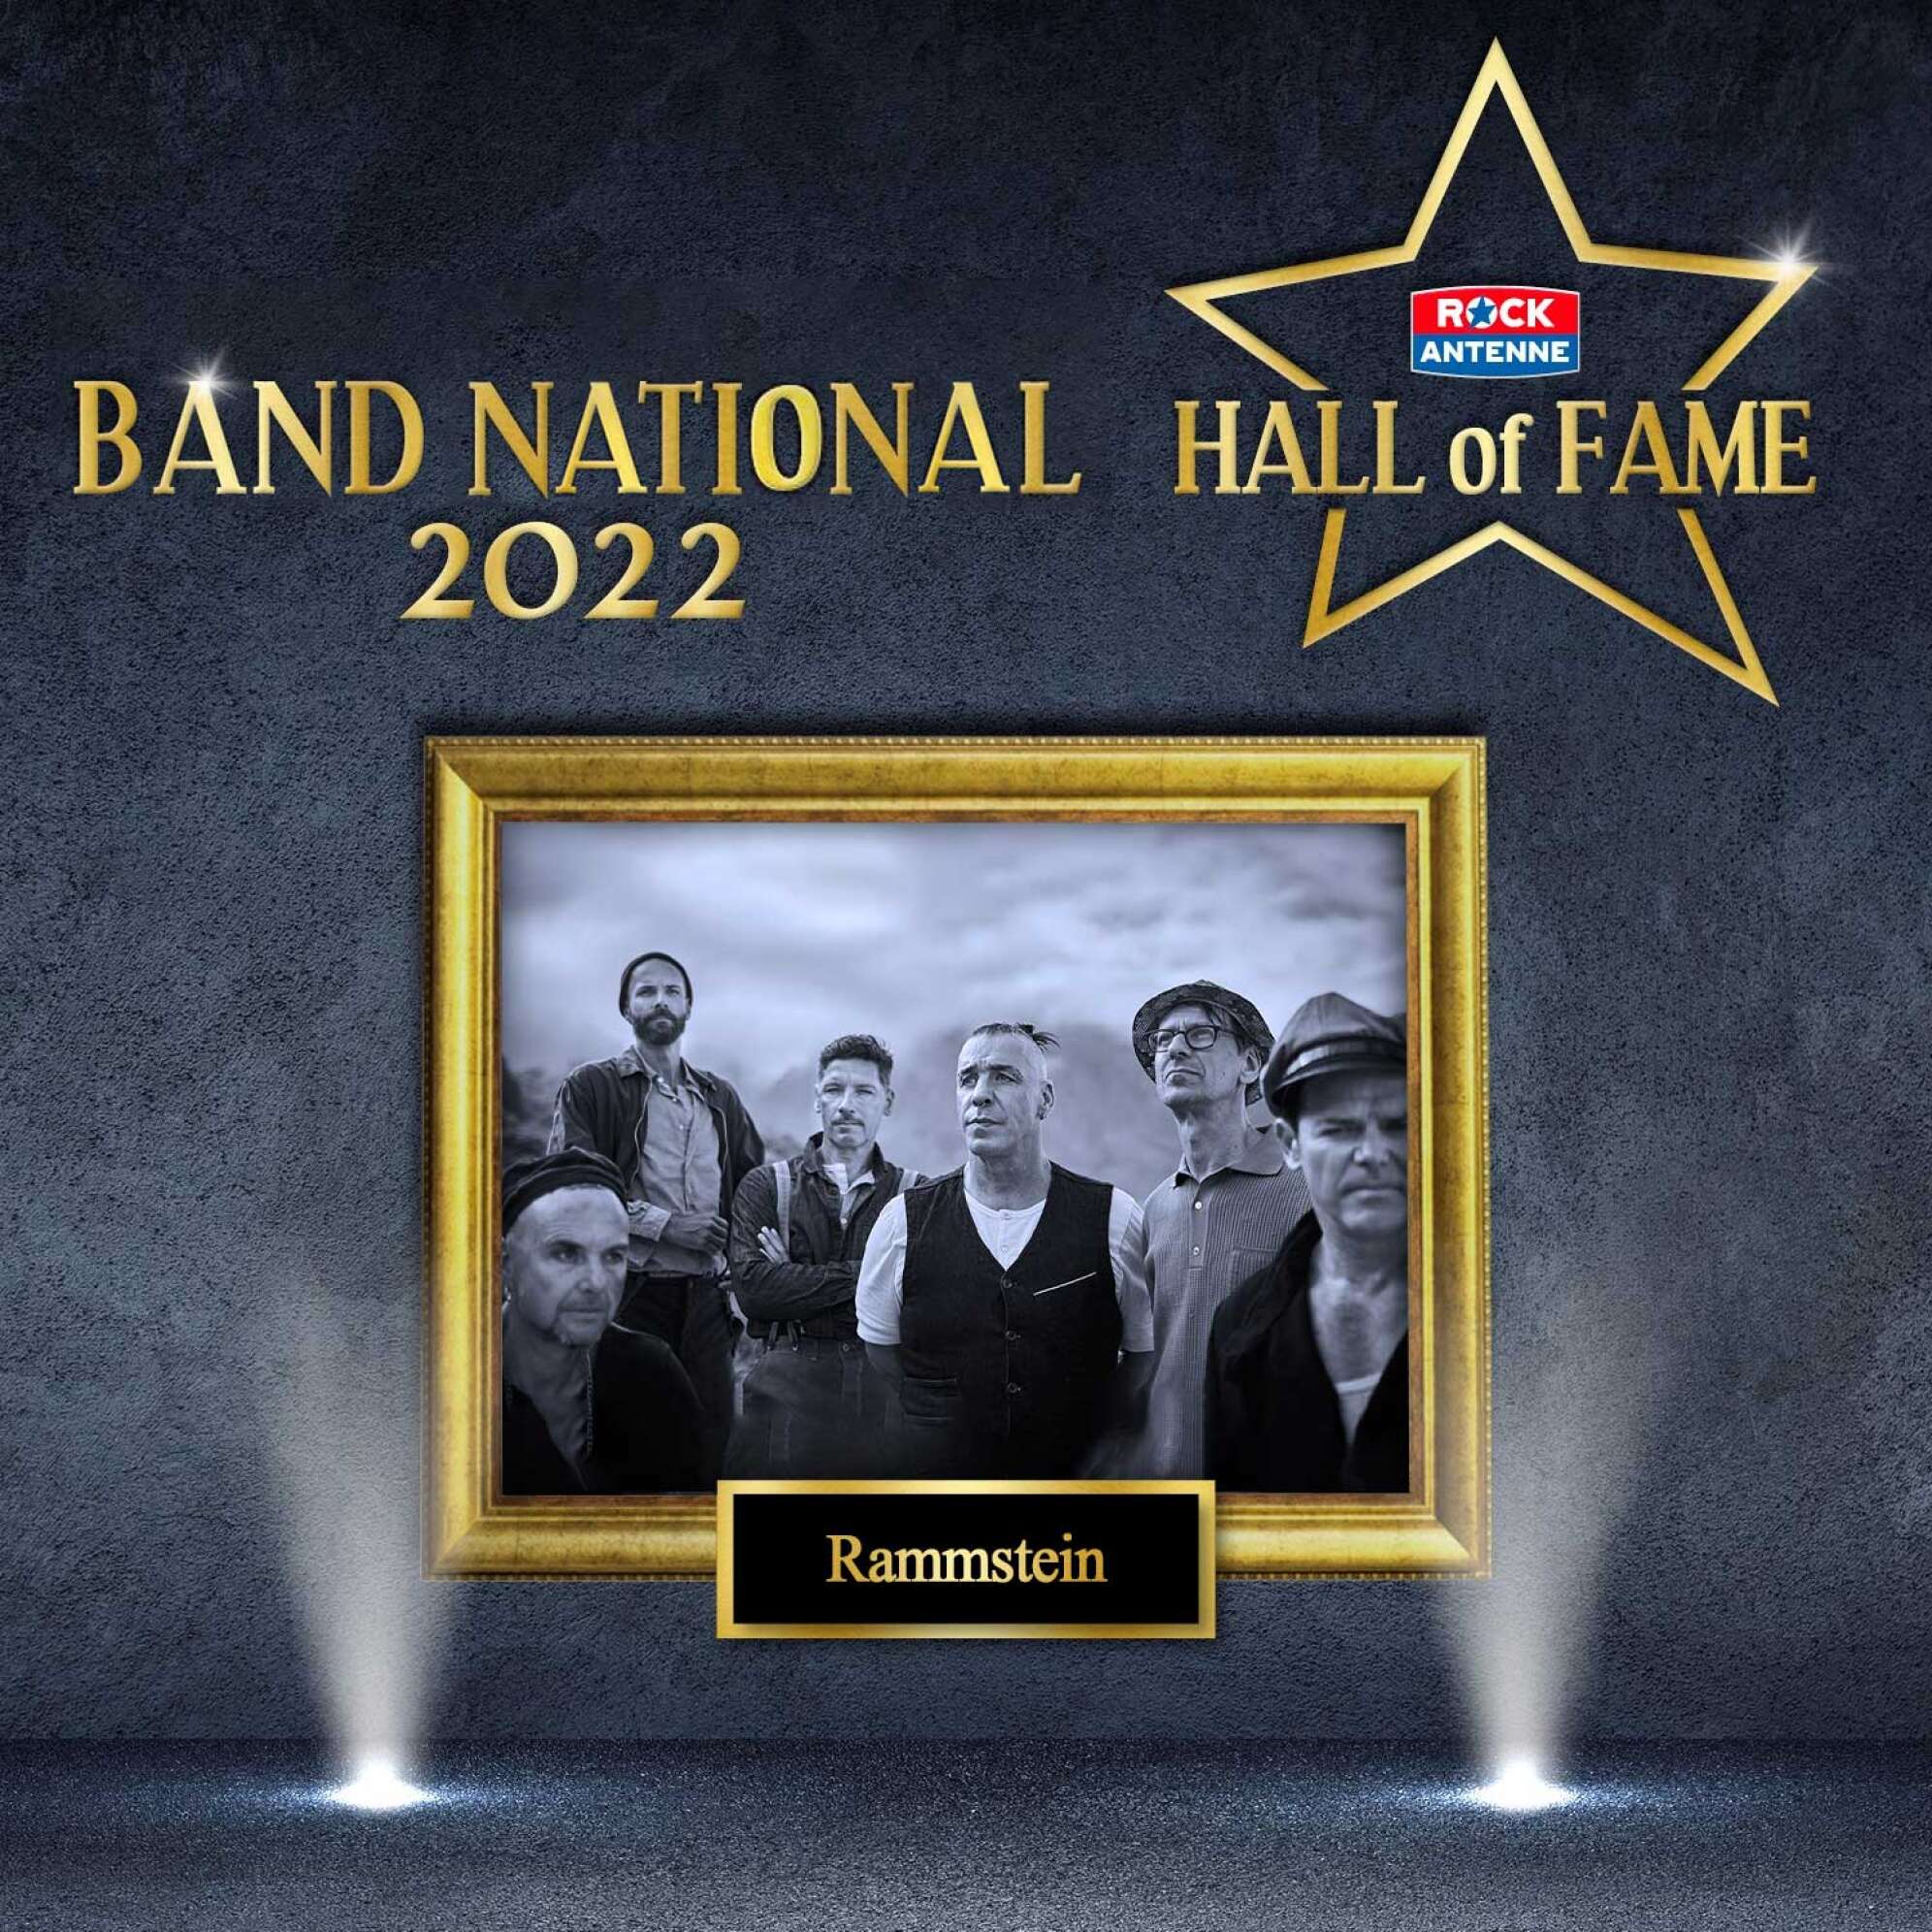 Bild der ROCK ANTENNE Hall of Fame - Gewinner Kategorie Band National 2022: Rammstein